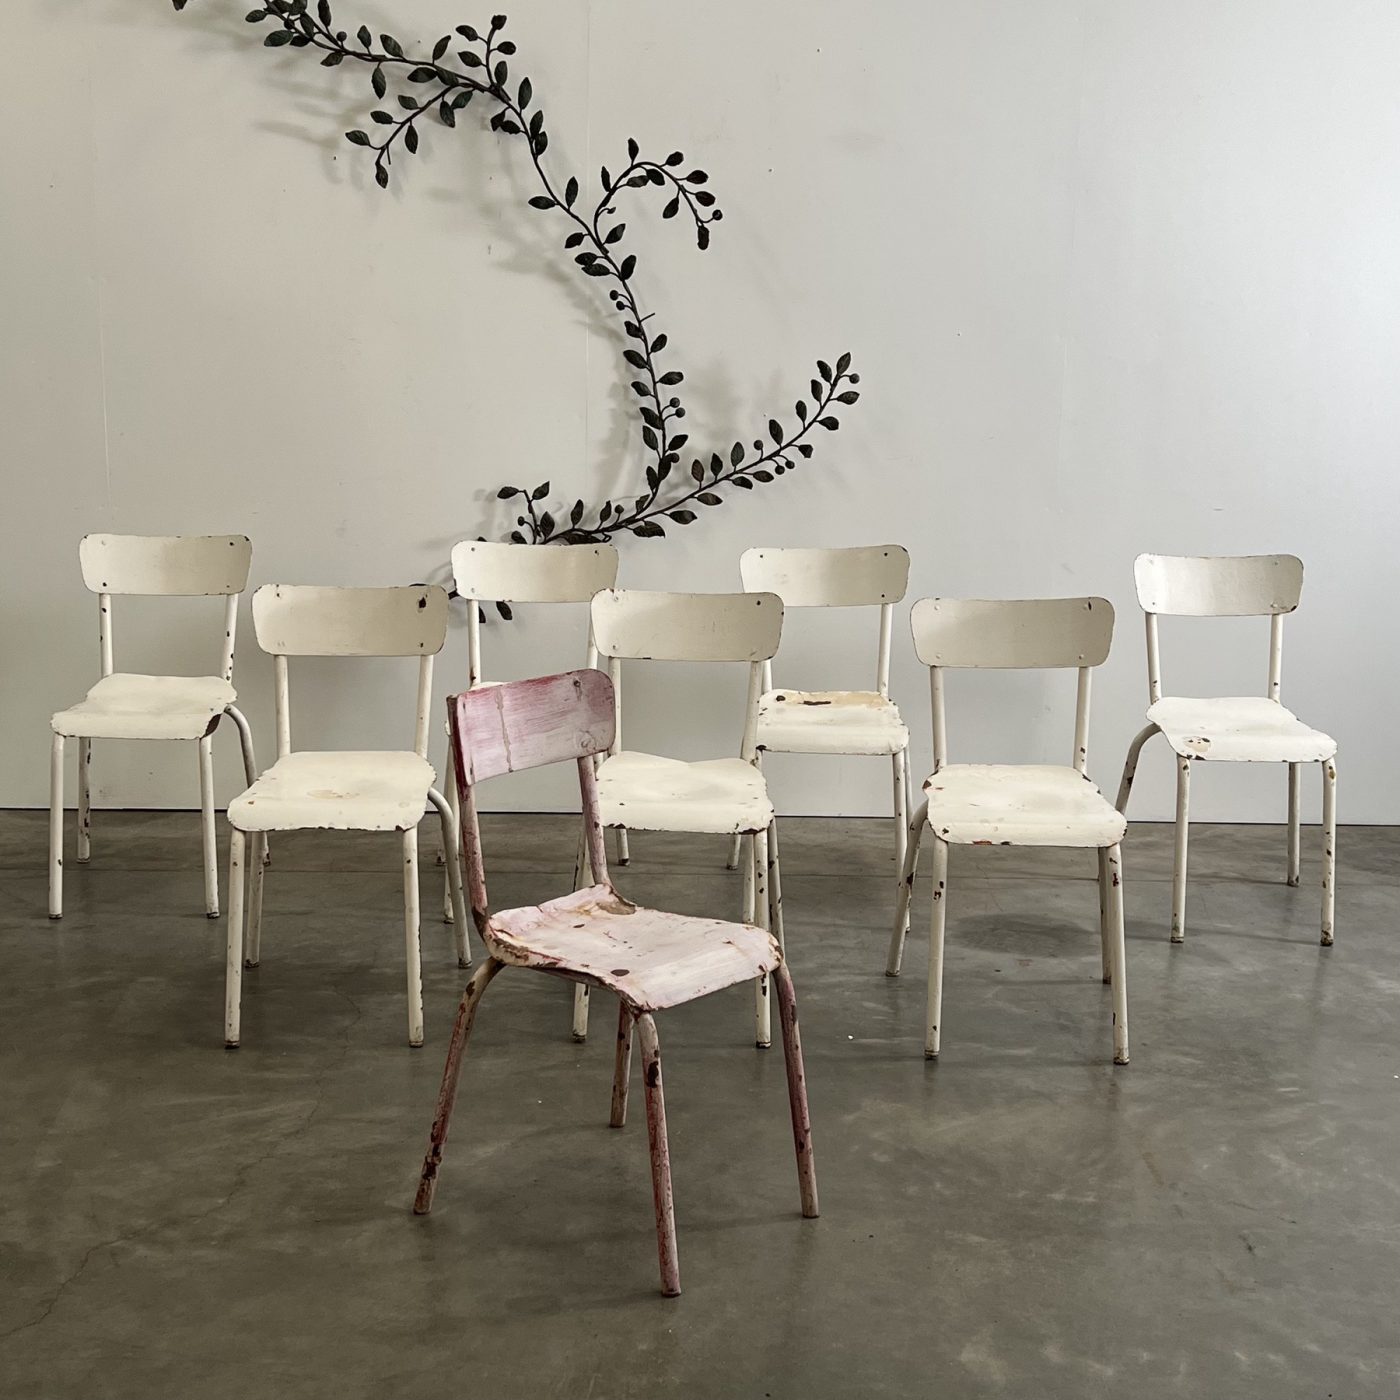 objet-vagabond-metal-chairs0006